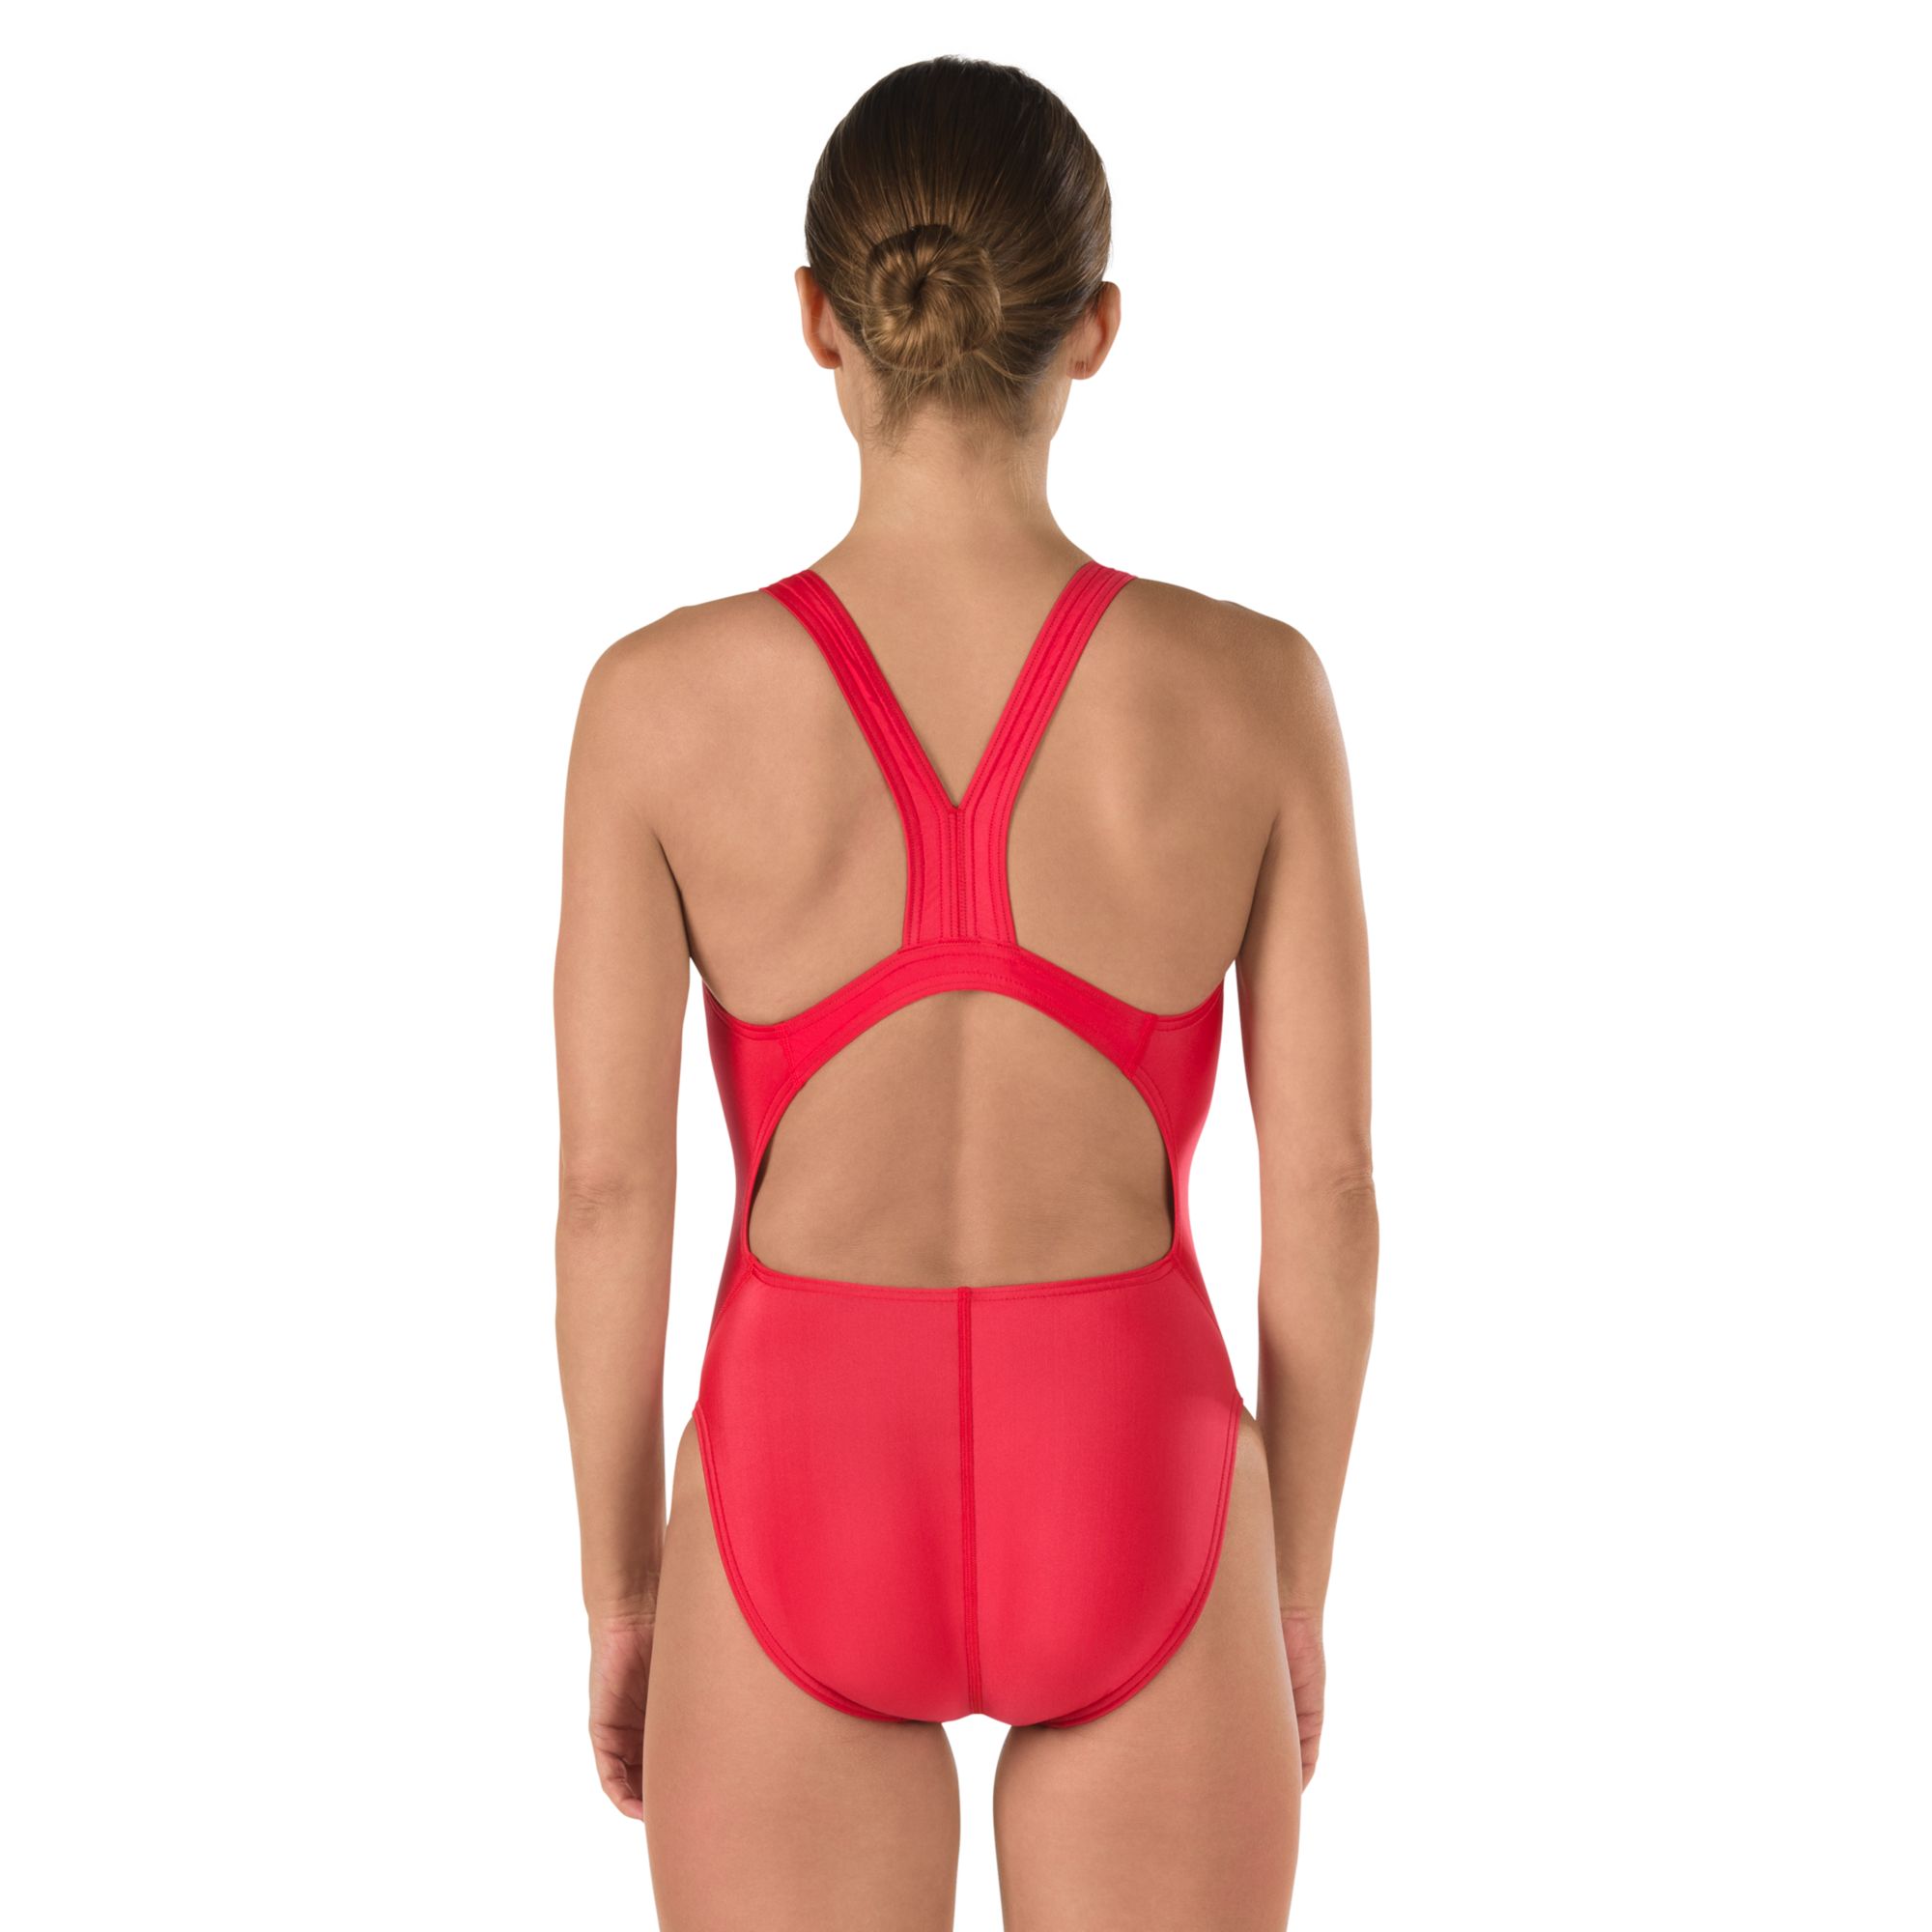 Speedo Solid Super Pro Prolt Swimsuit Ebay